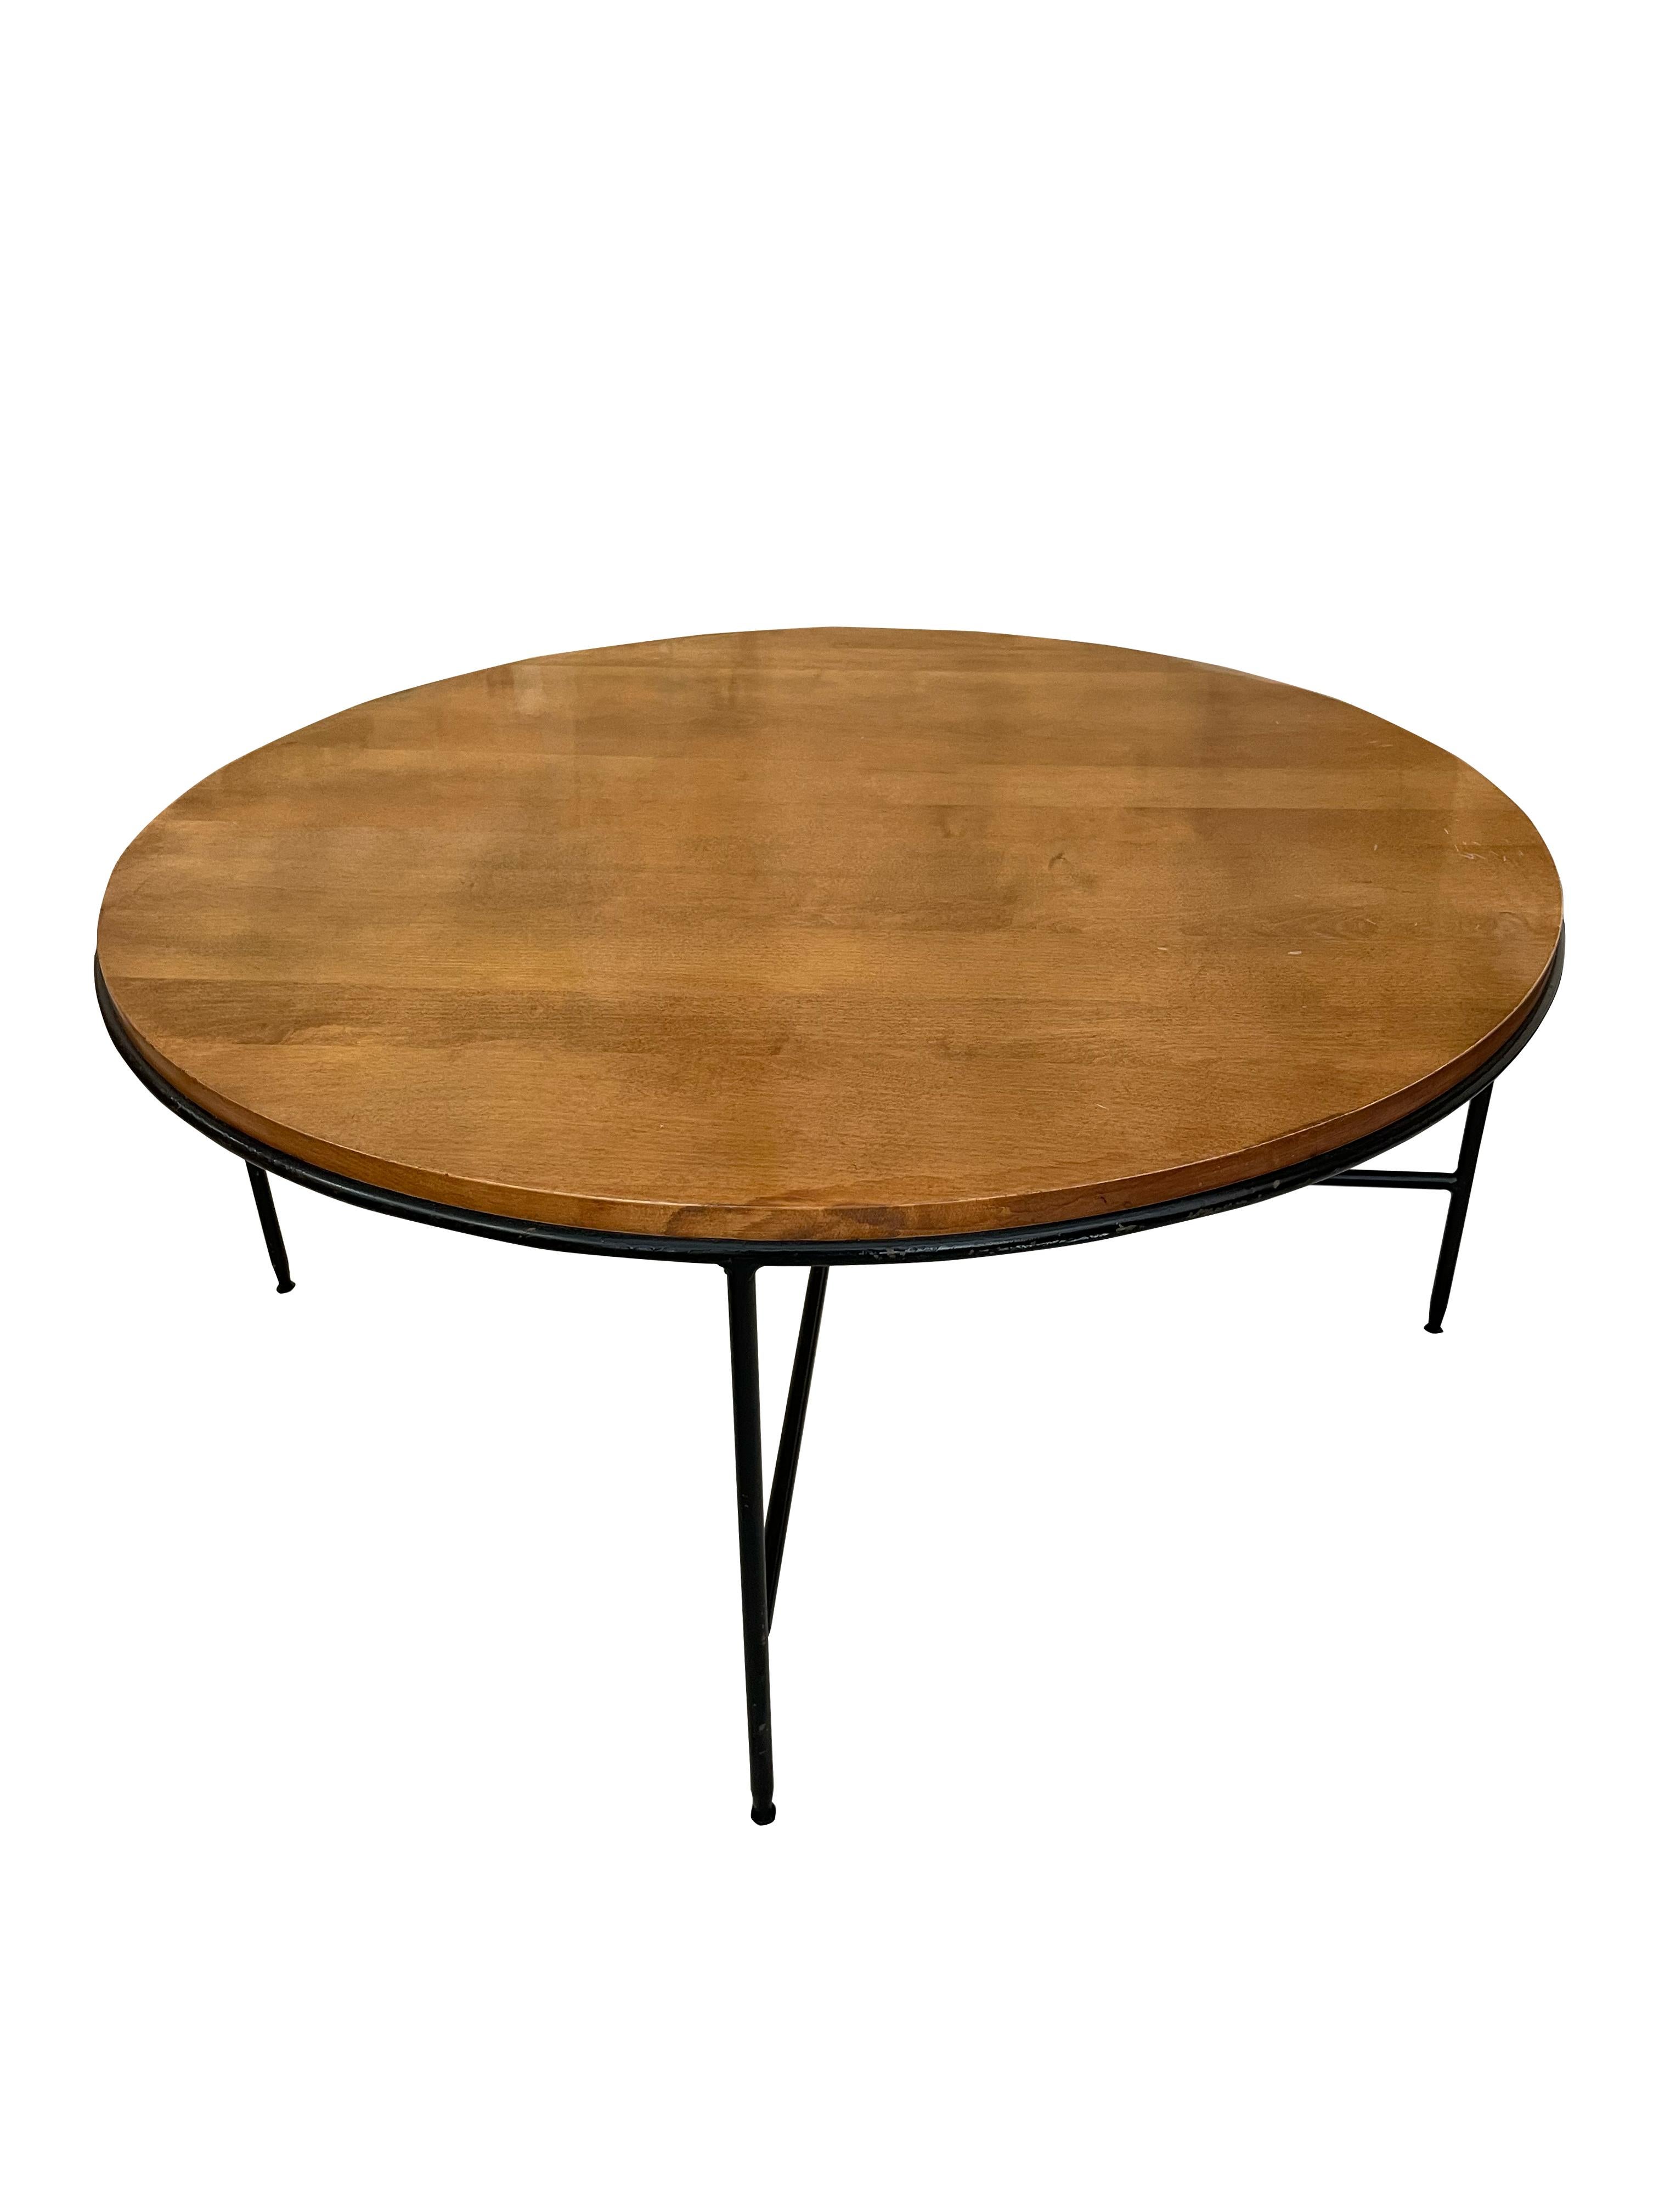 American Paul McCobb for Wichendon Furniture Company Round Coffee Table